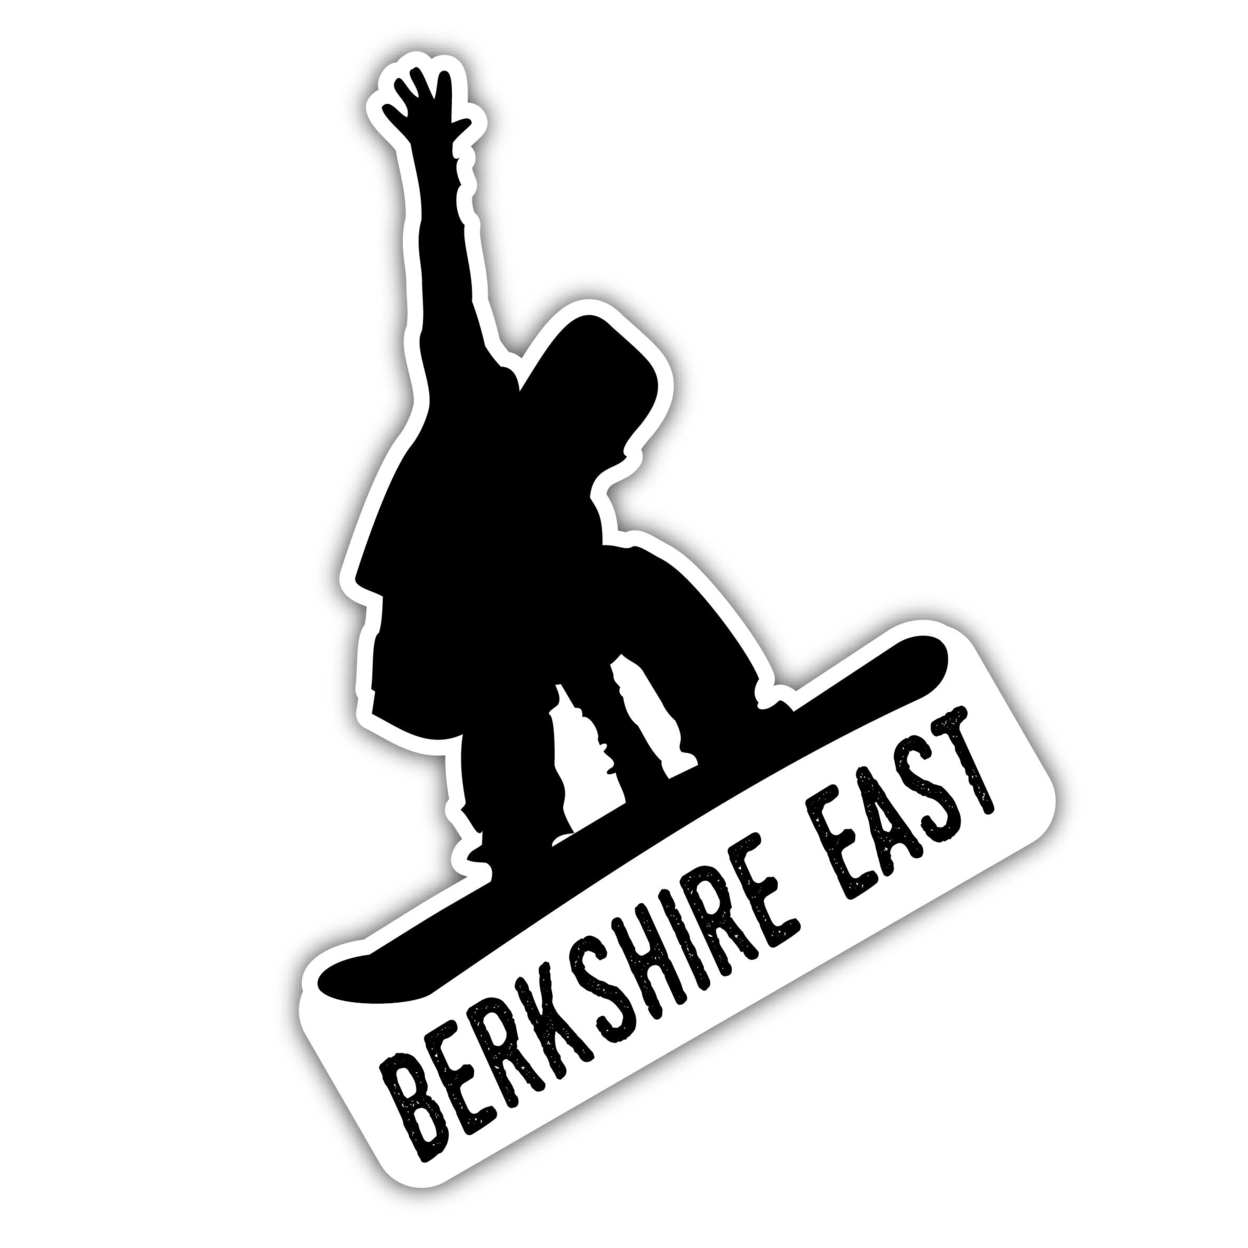 Berkshire East Massachusetts Ski Adventures Souvenir Approximately 5 X 2.5-Inch Vinyl Decal Sticker Goggle Design